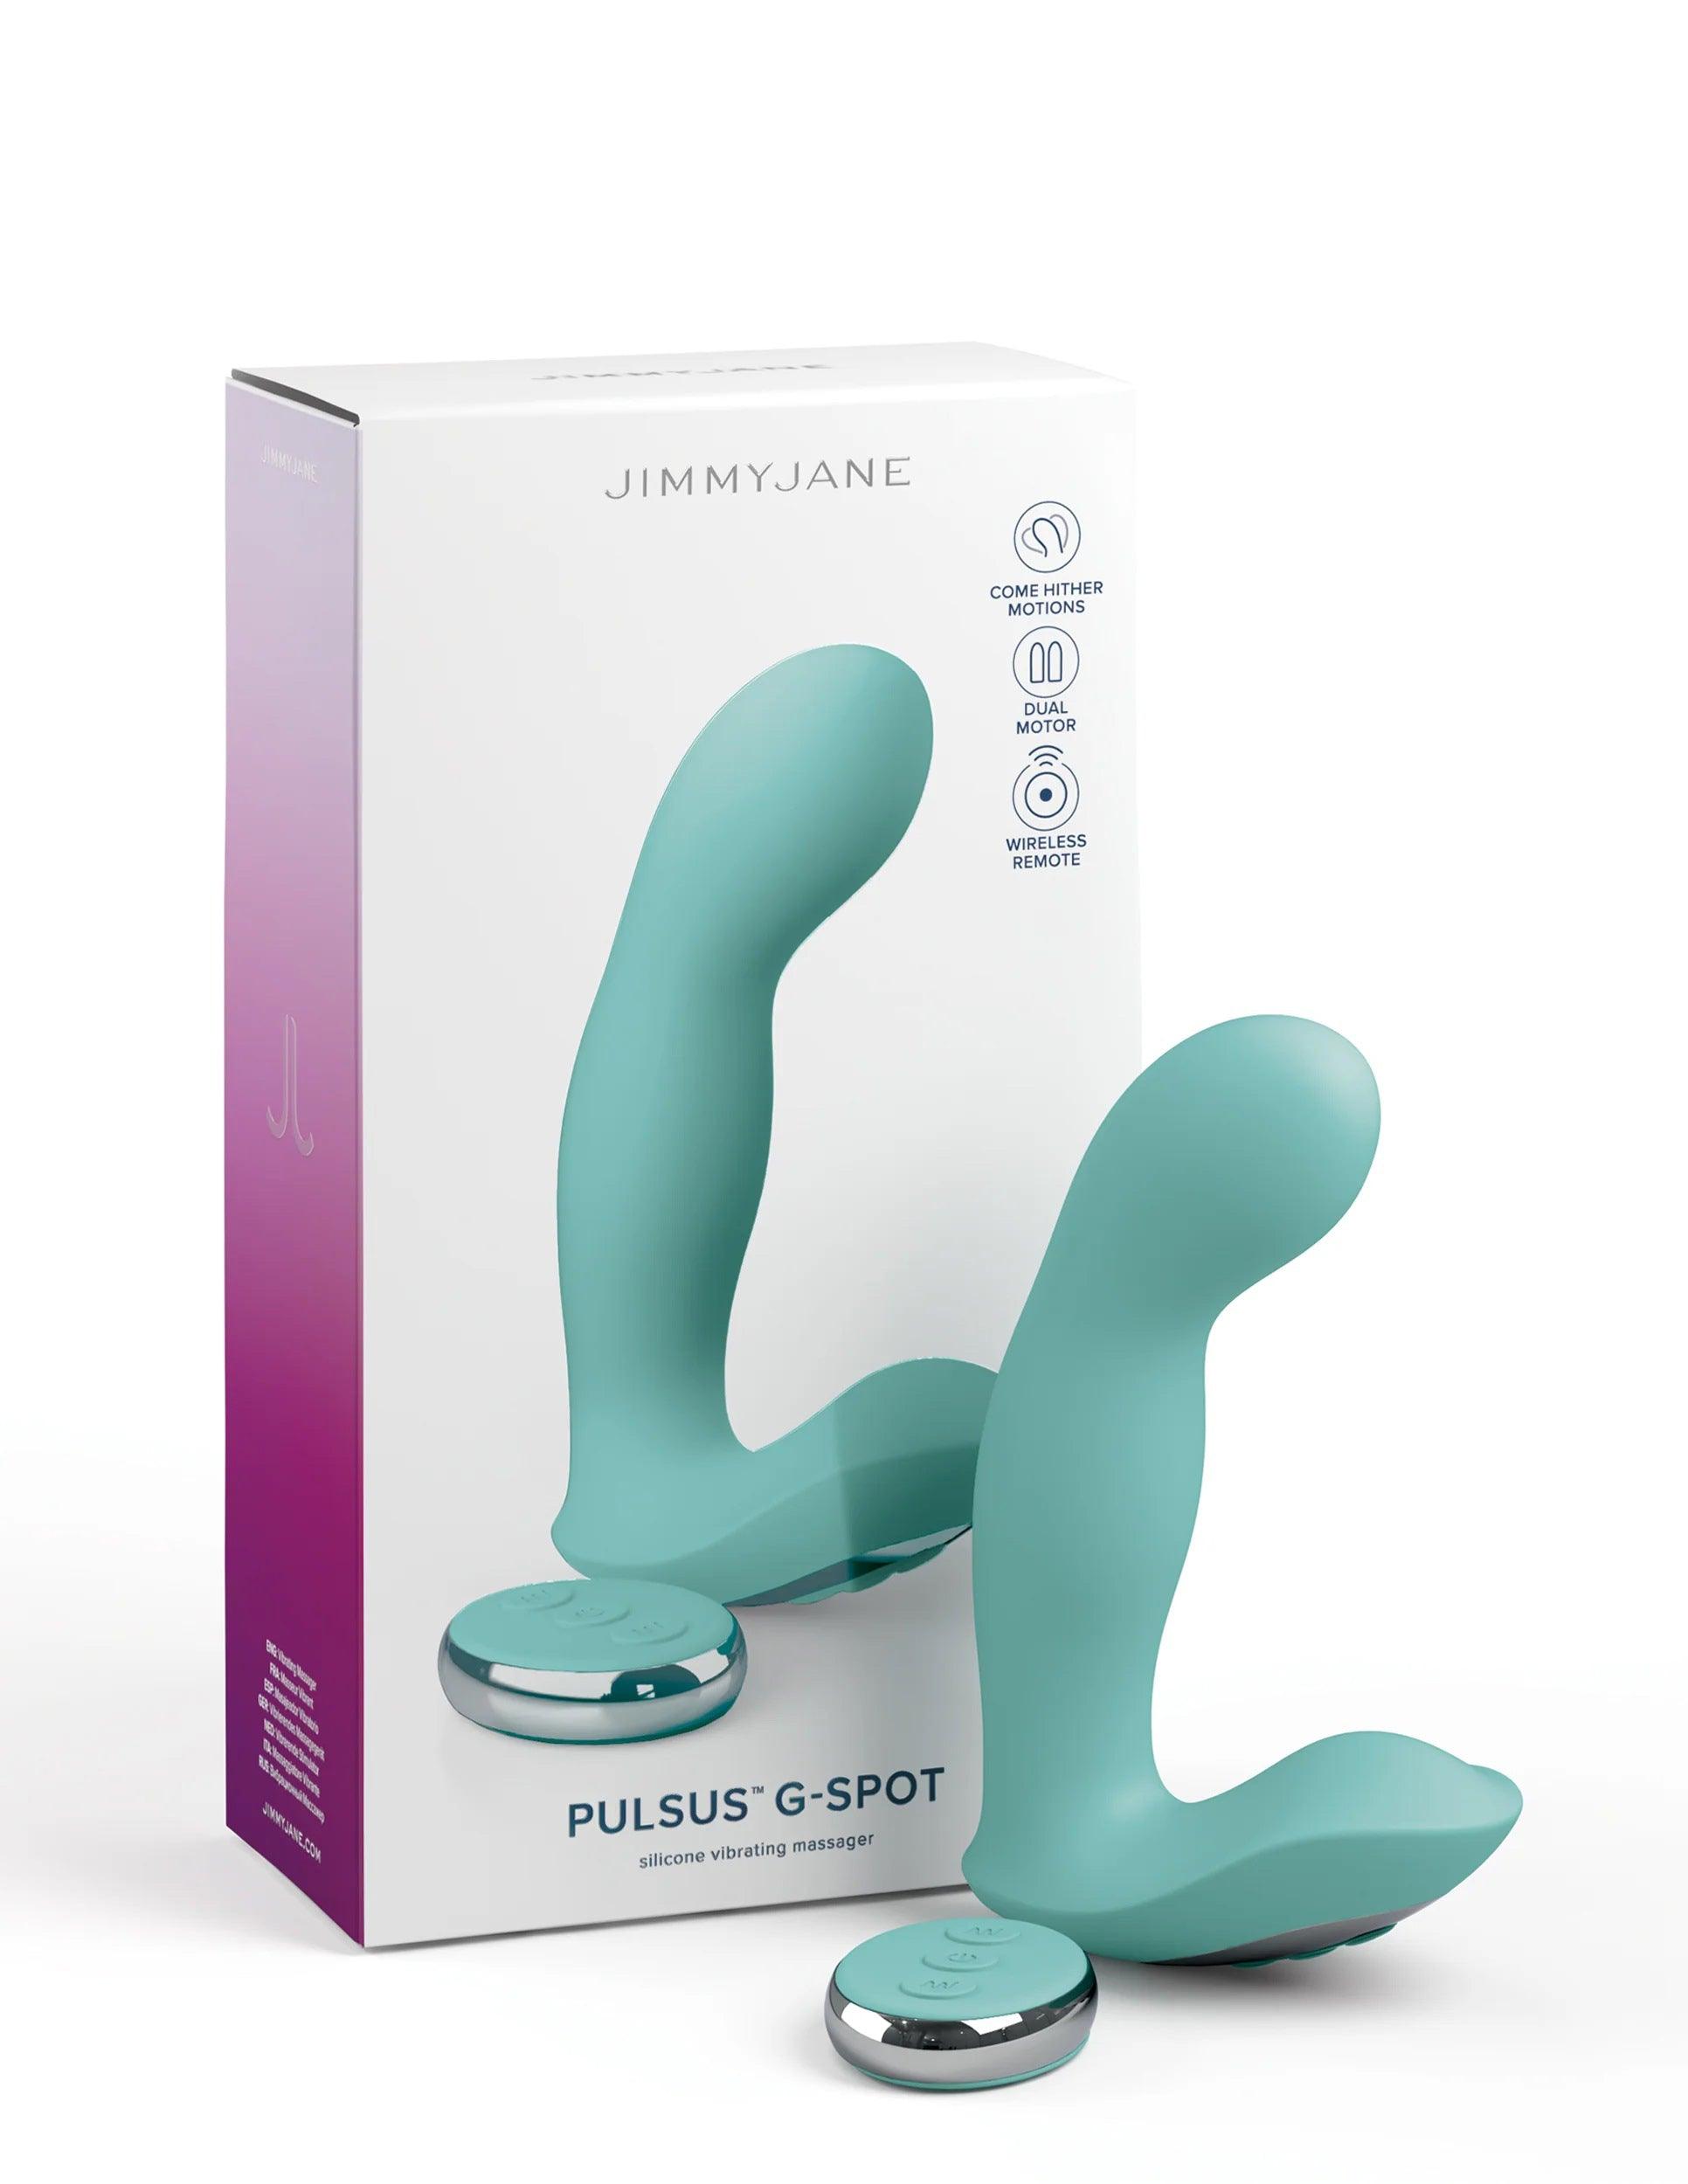 Pulsus G-Spot - Teal - My Sex Toy Hub